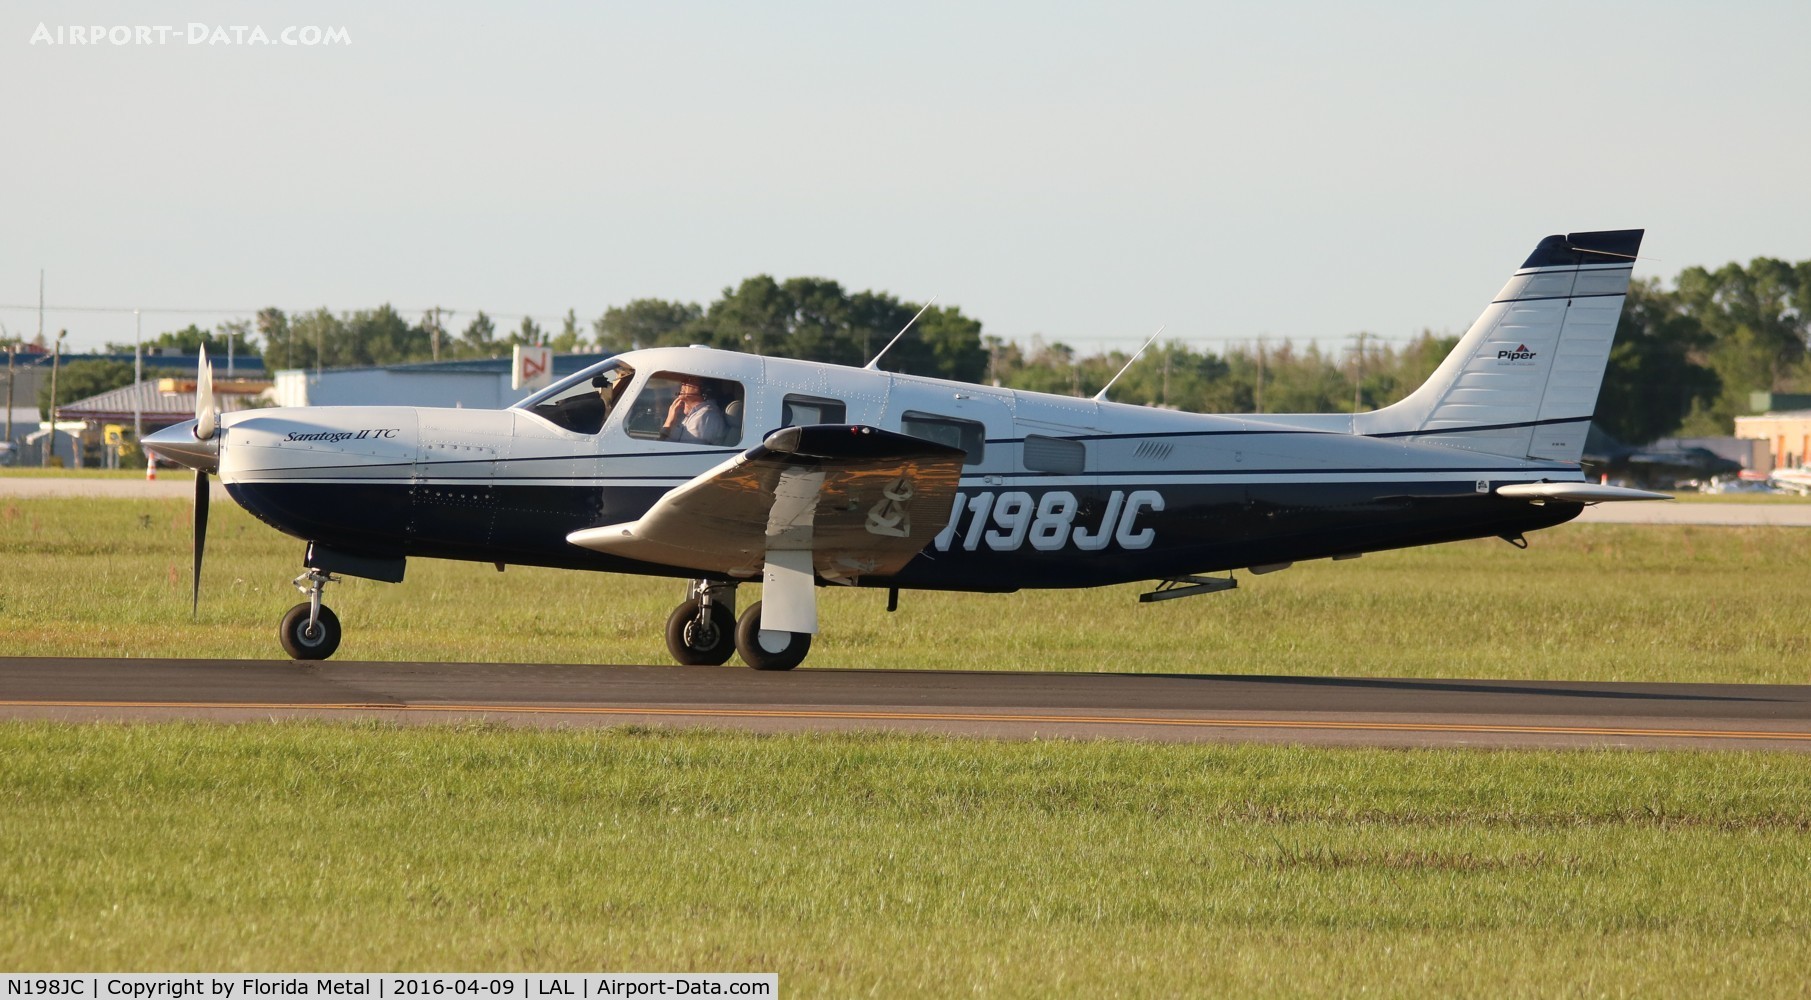 N198JC, 1998 Piper PA-32R-301T Turbo Saratoga C/N 3257028, PA-32R-301T